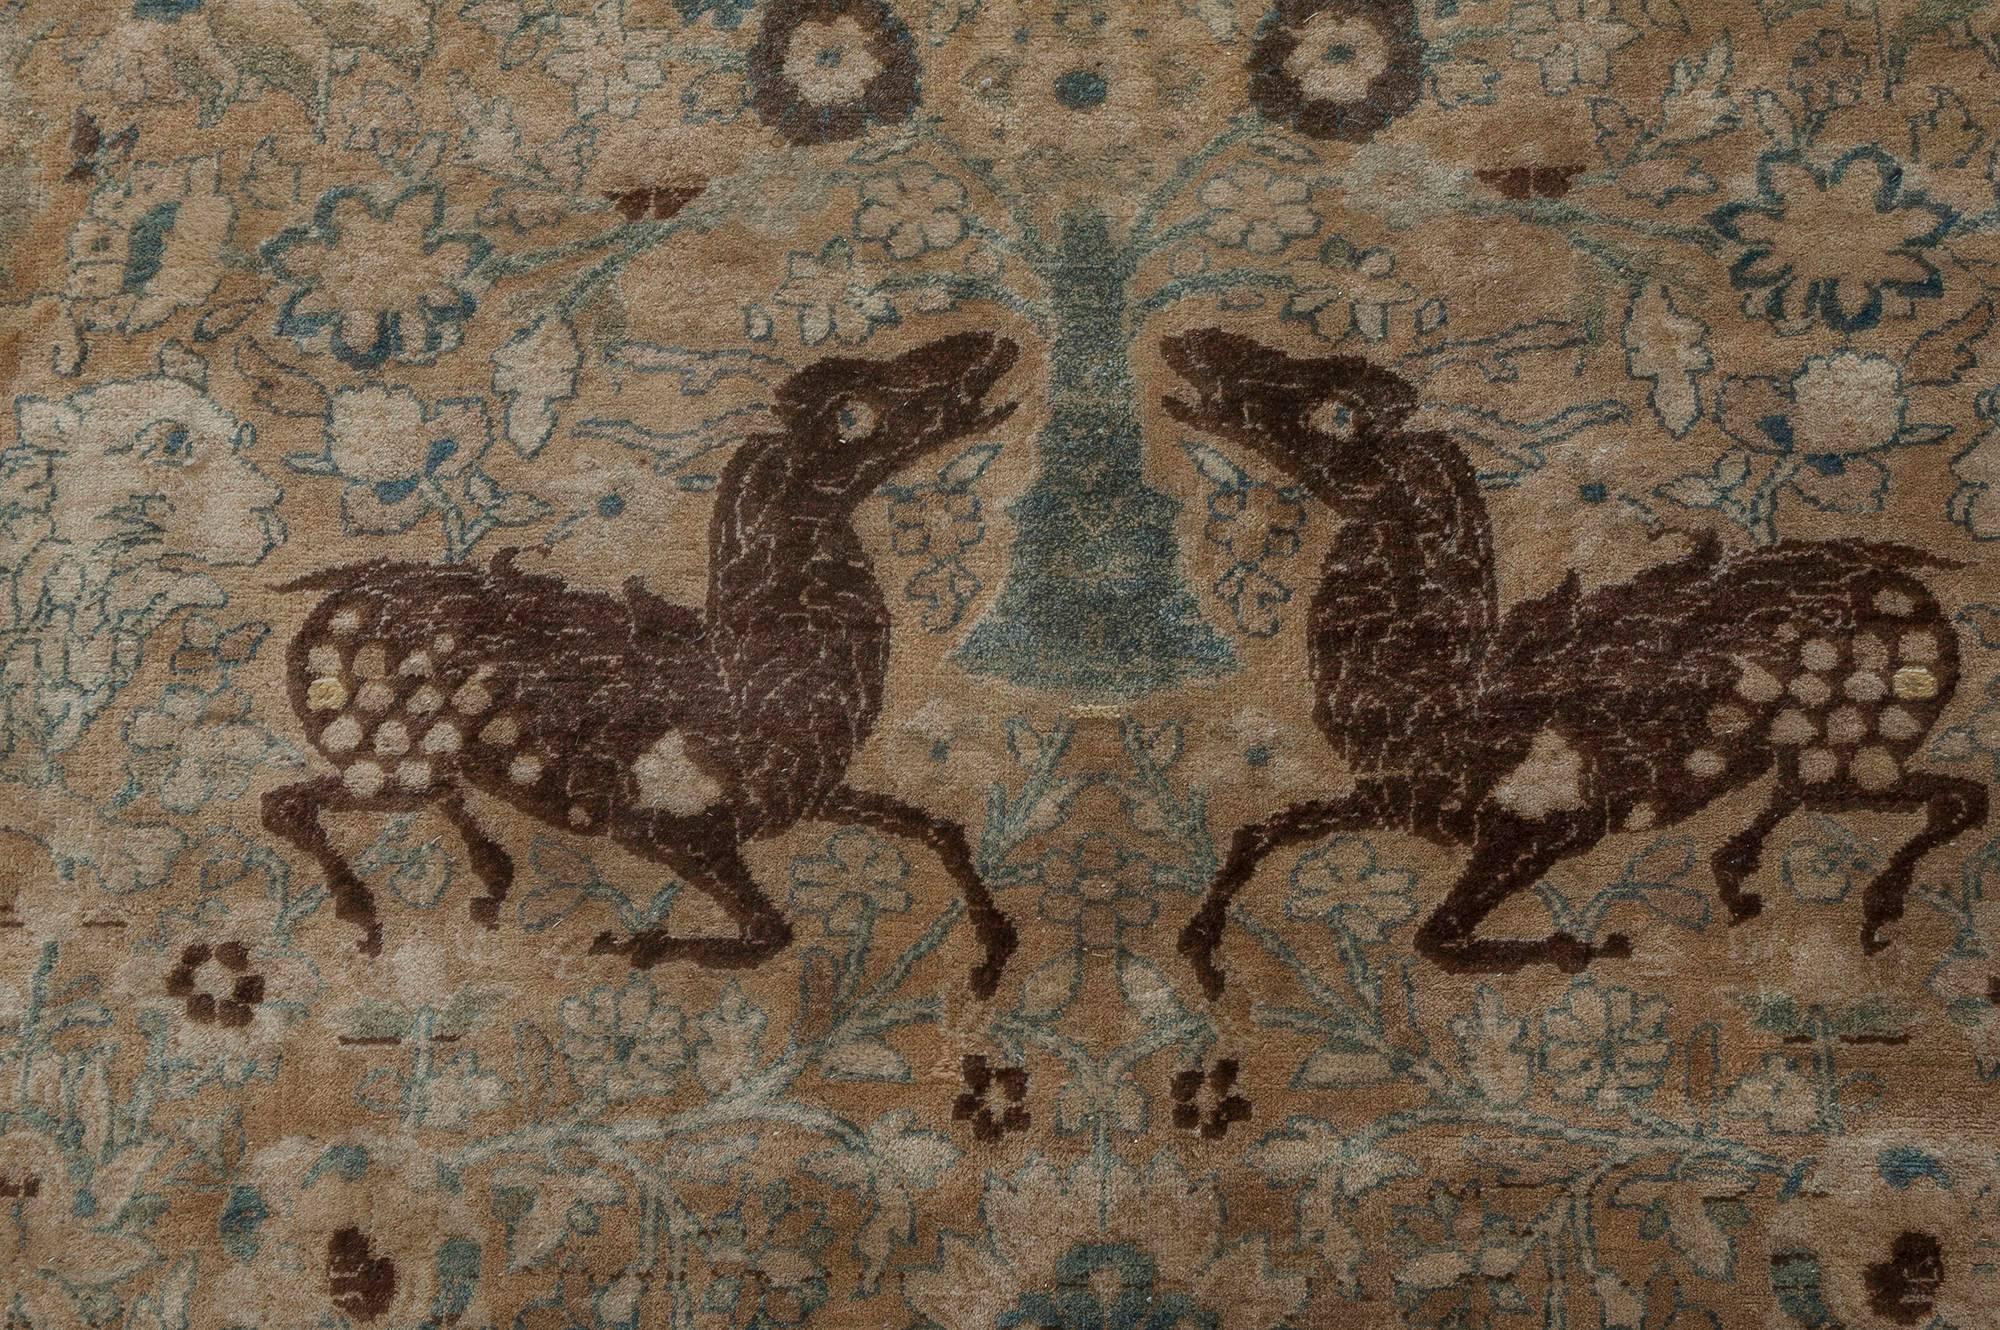 Antique Persian Kirman Carpet
Size: 10'3